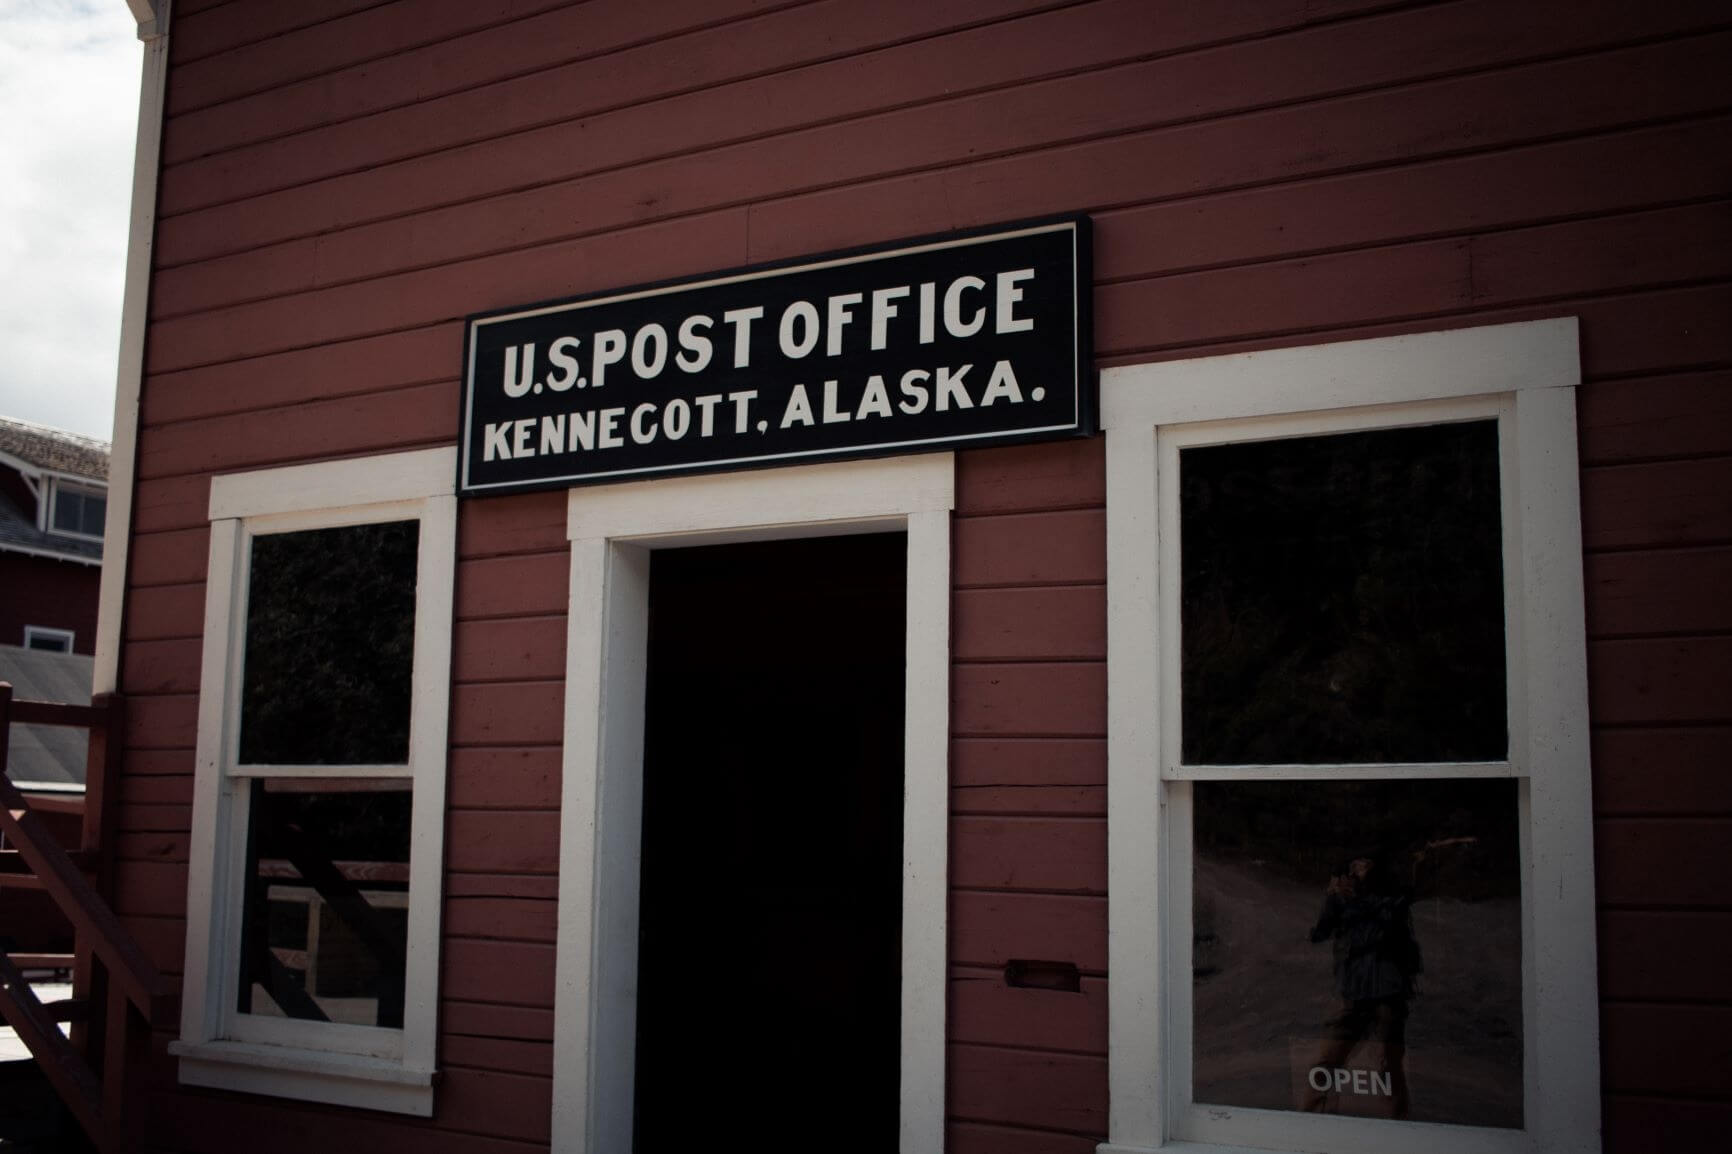 Post office Kennecott, Alaska